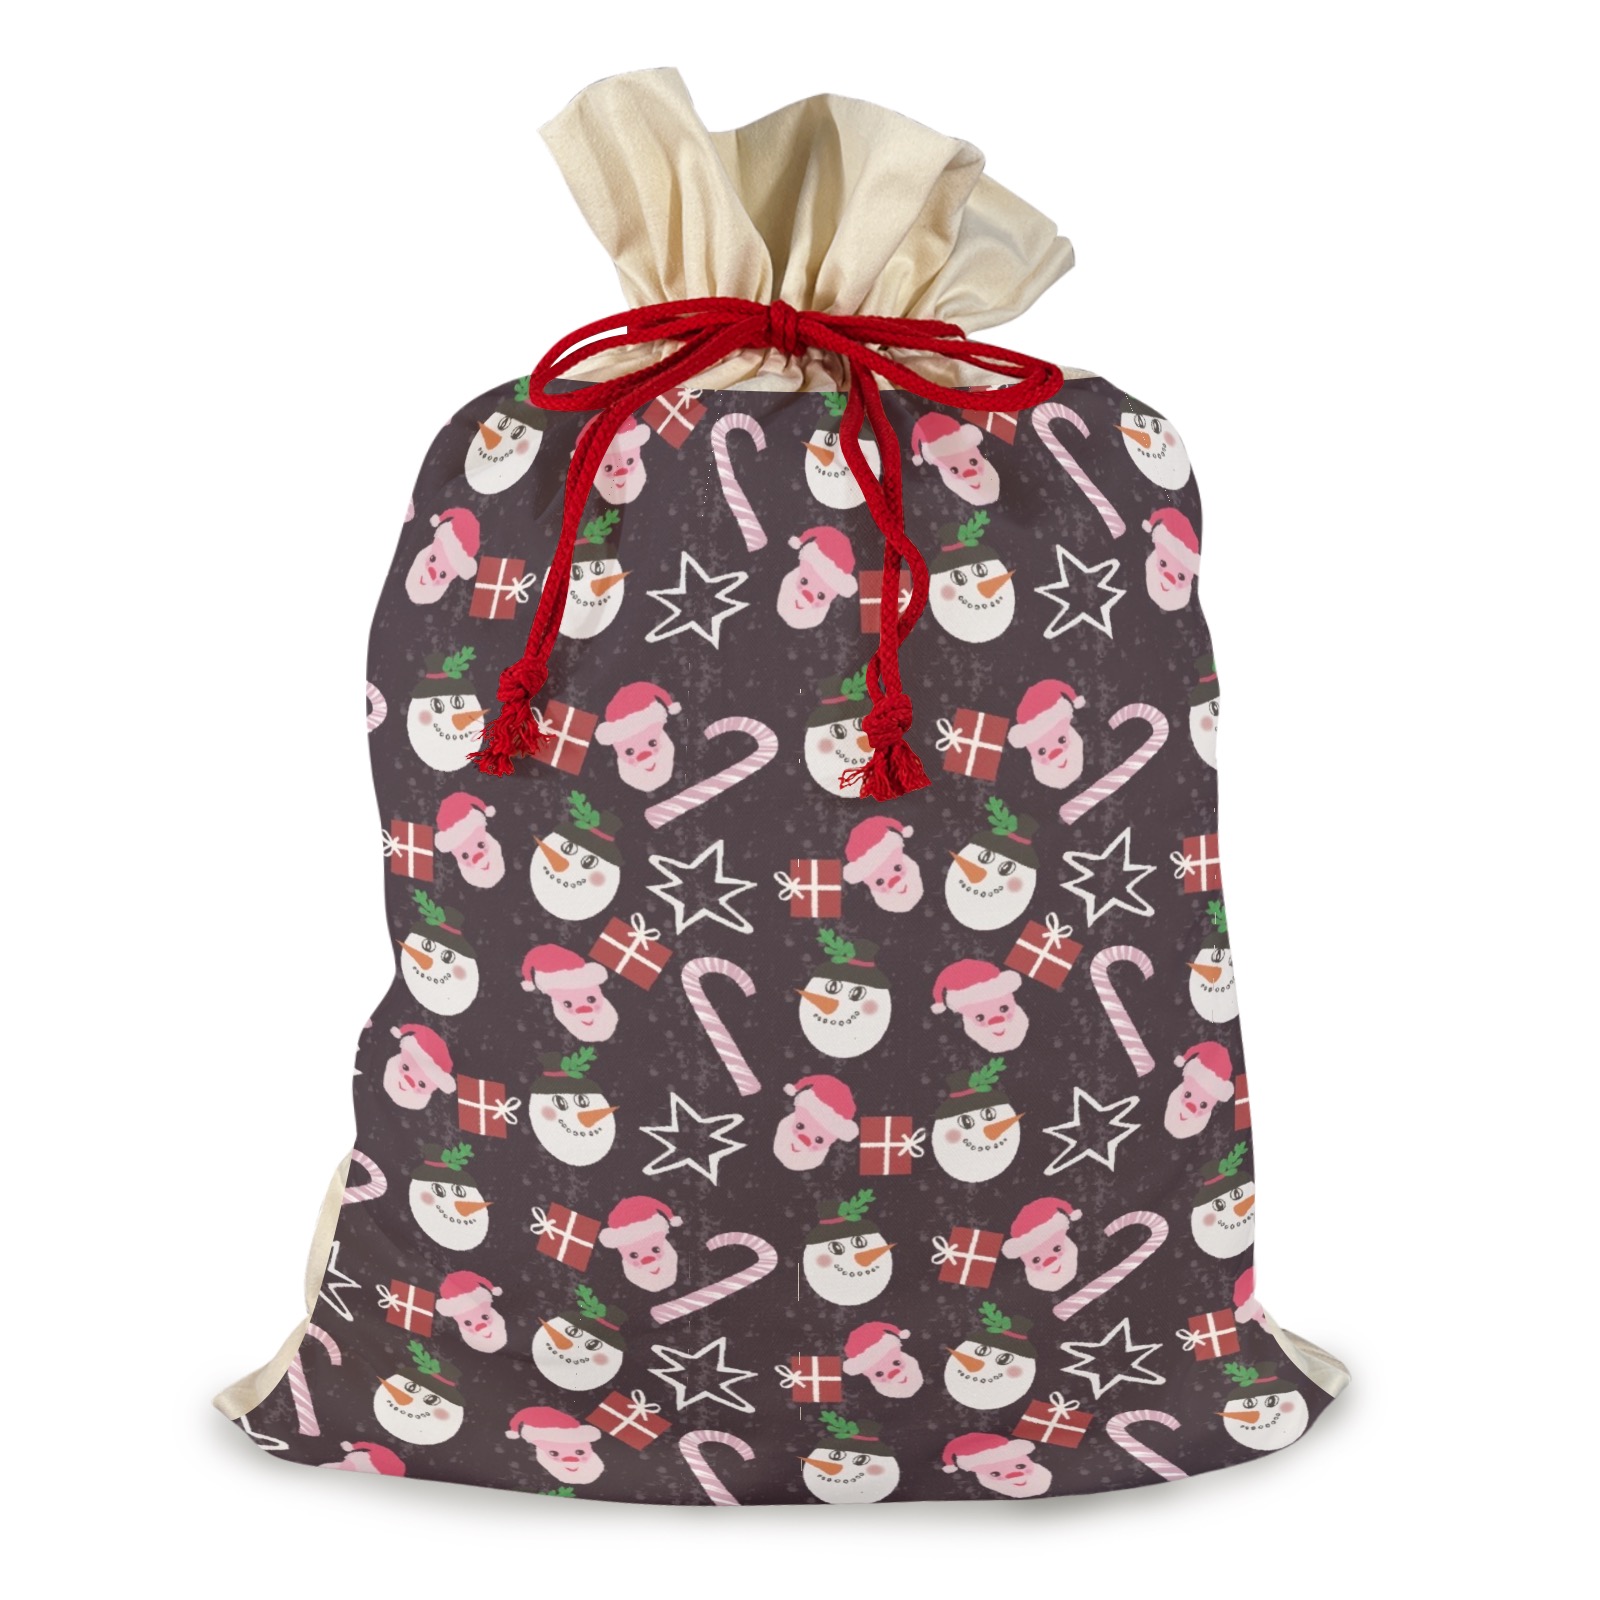 Christmas Pattern Design 3 Pack Santa Claus Drawstring Bags (One-Sided Printing)